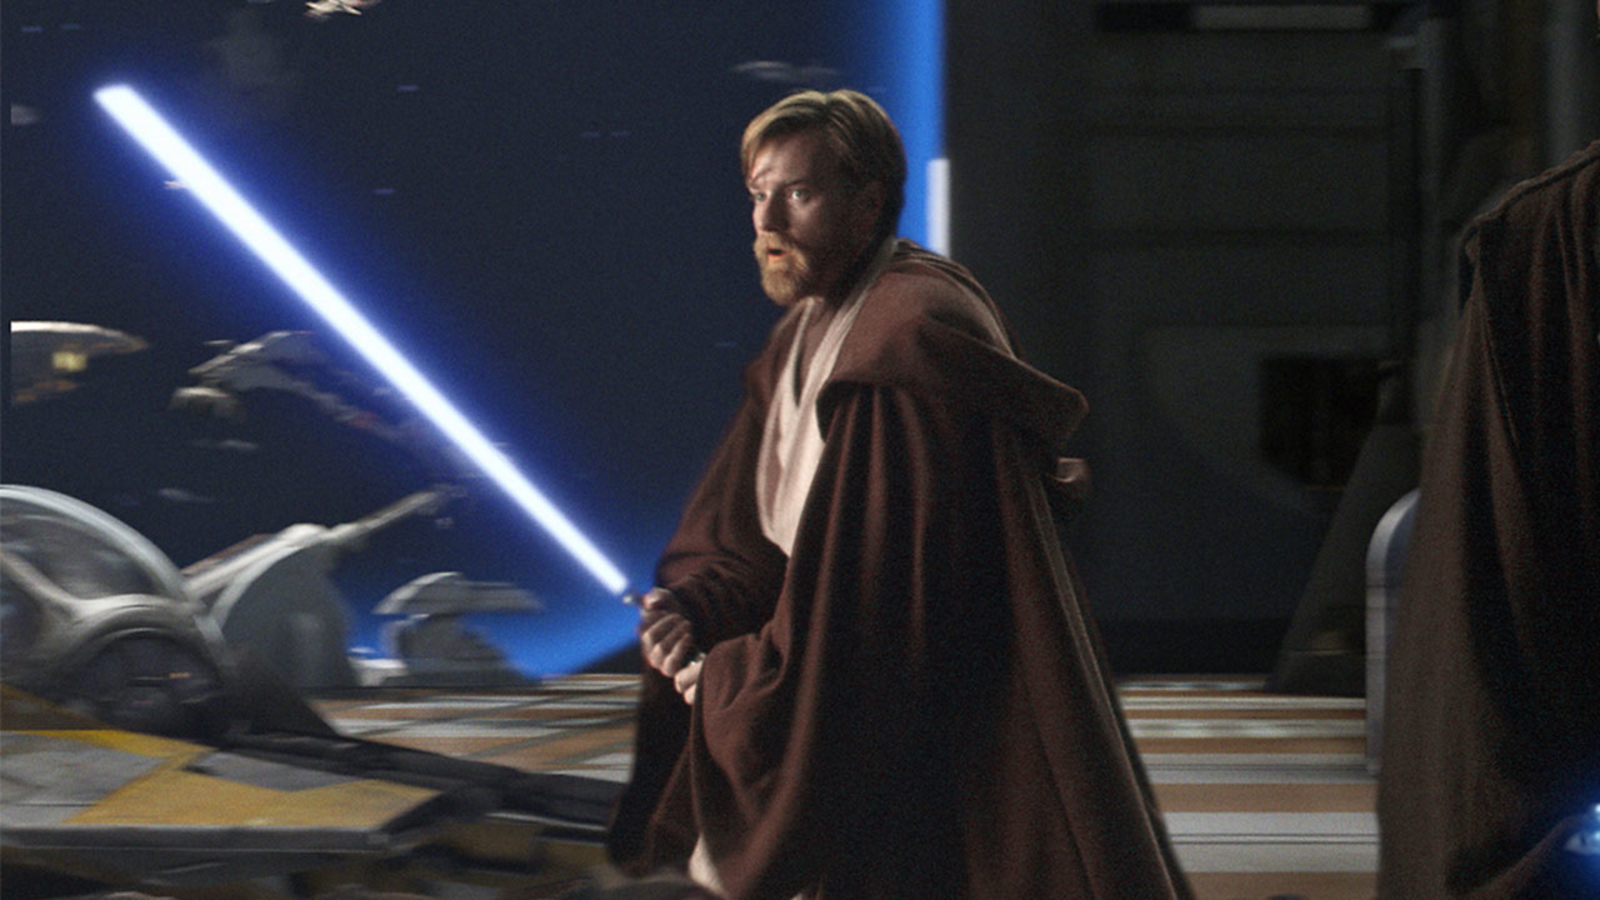 Star Wars : on sait quand se déroulera la série sur Obi-Wan Kenobi